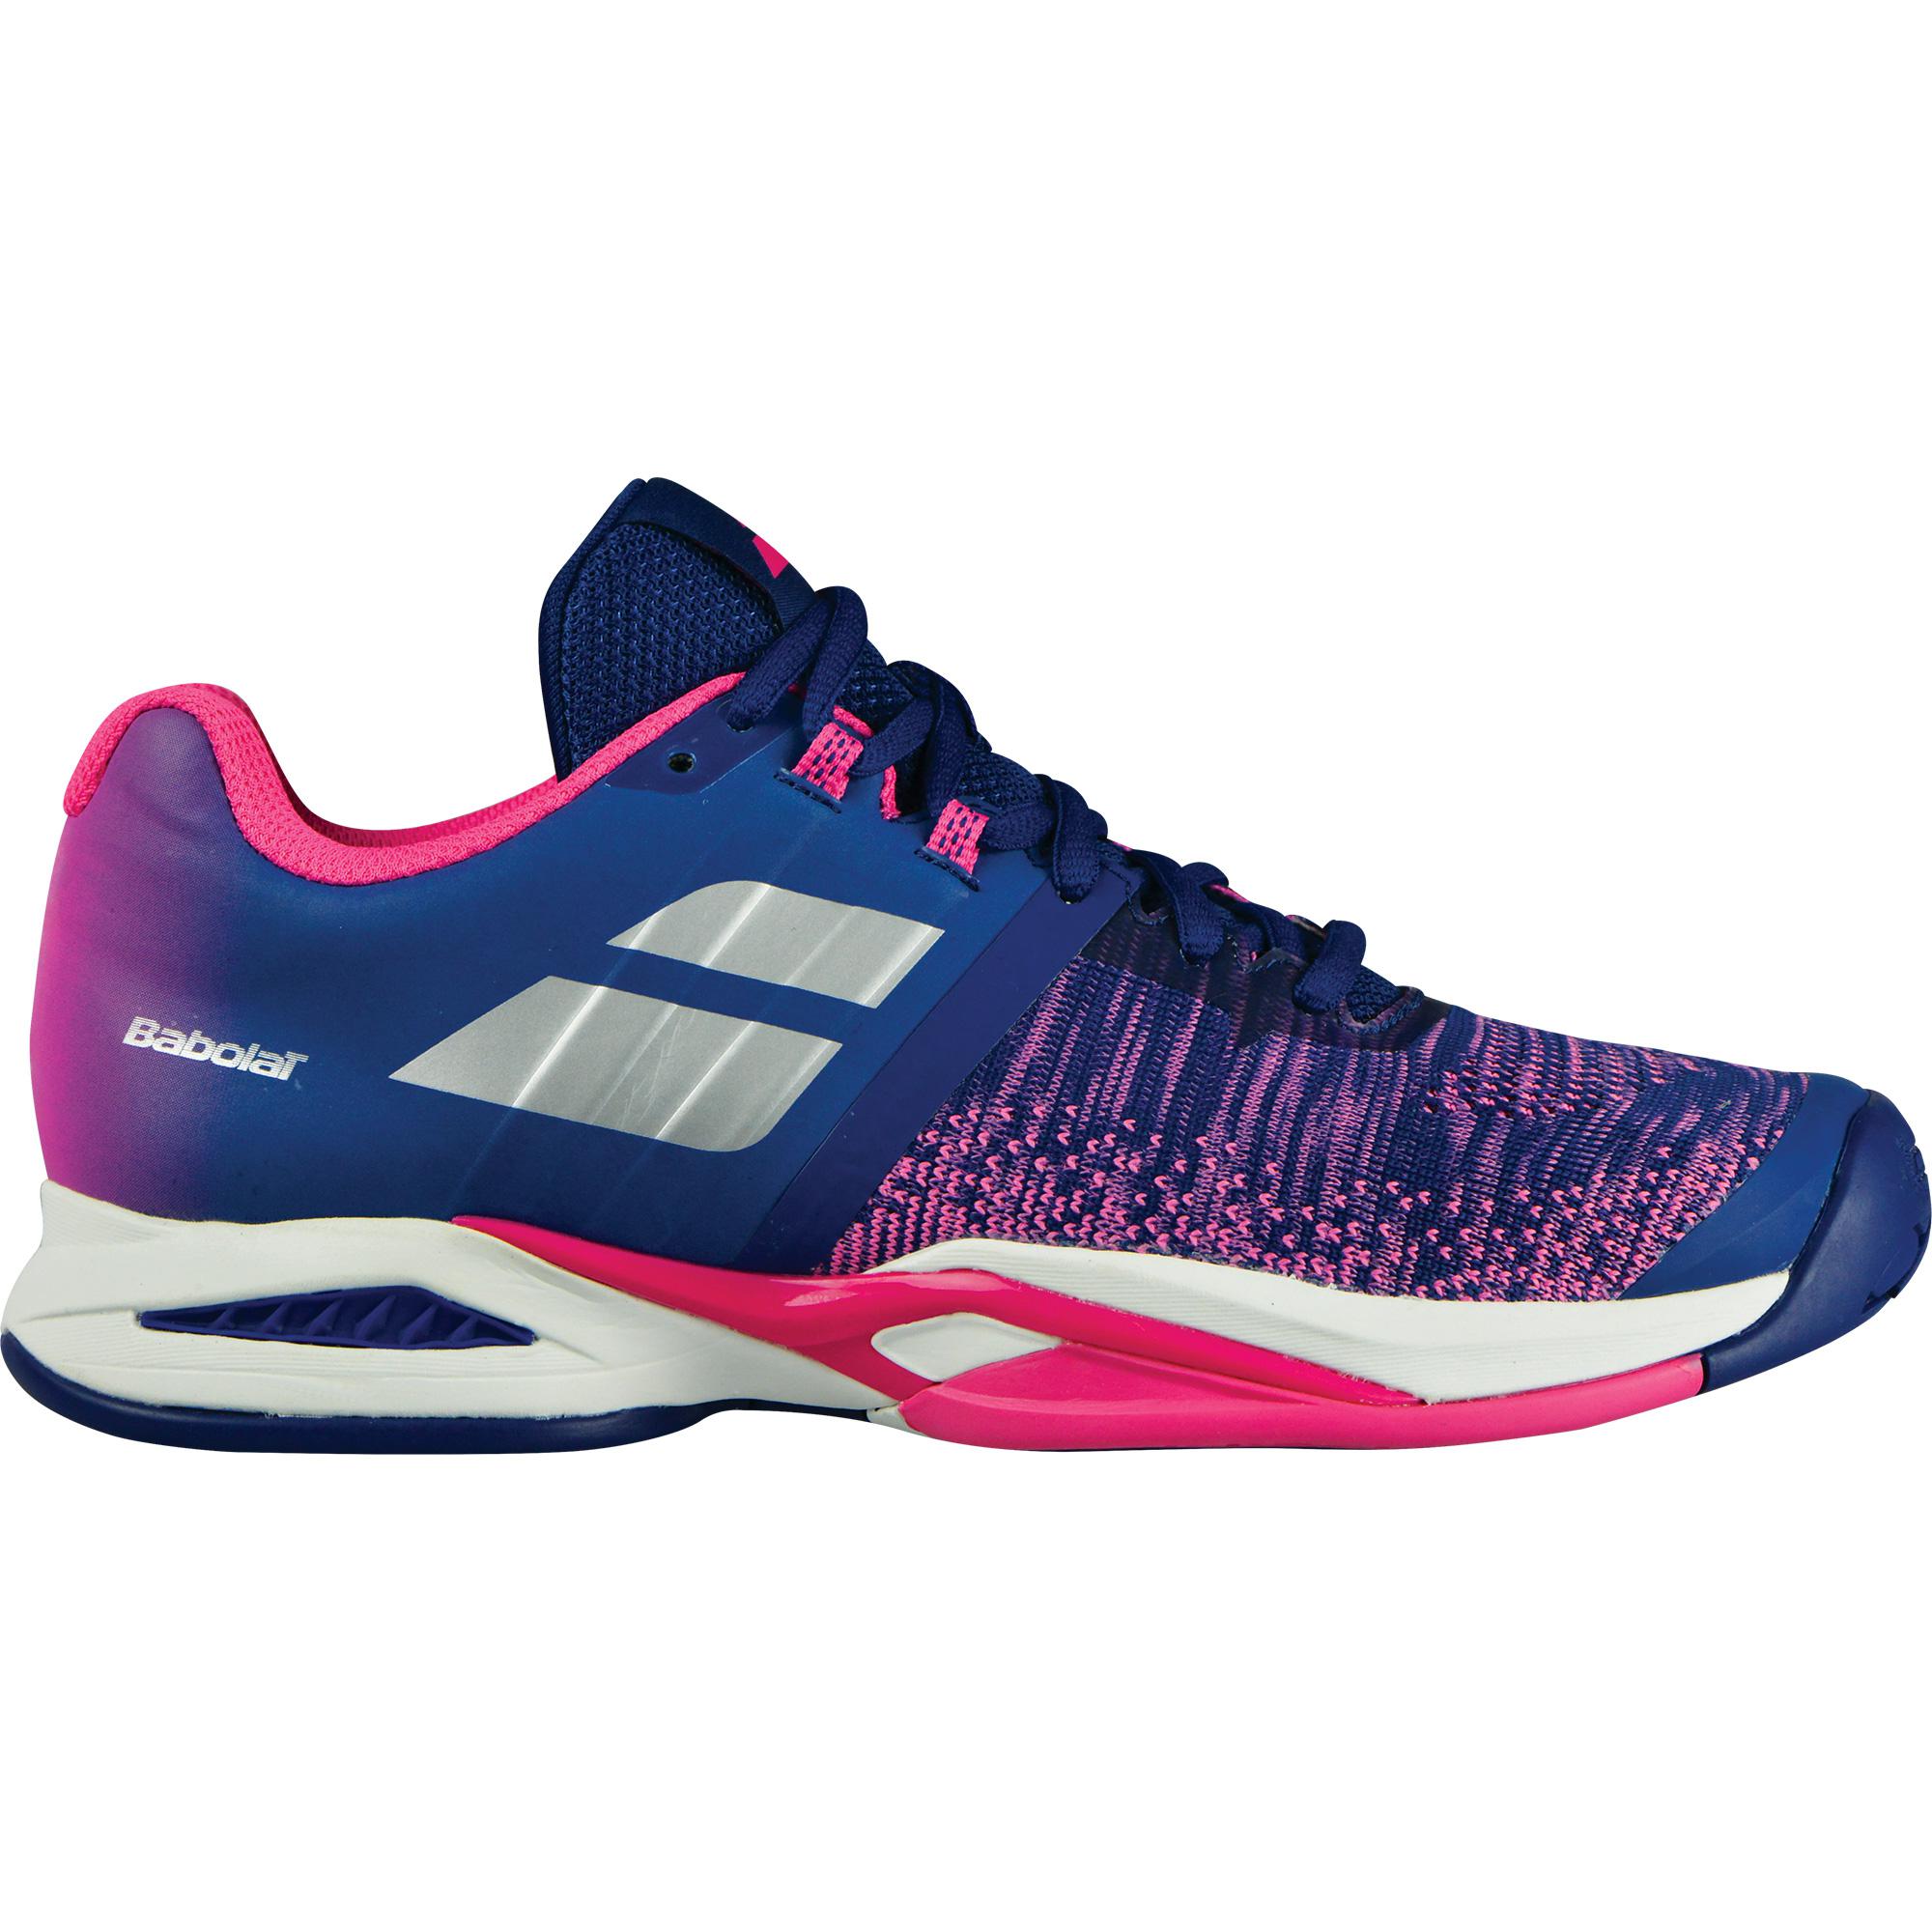 Babolat Womens Propulse Blast Tennis Shoes - Blue/Pink - Tennisnuts.com